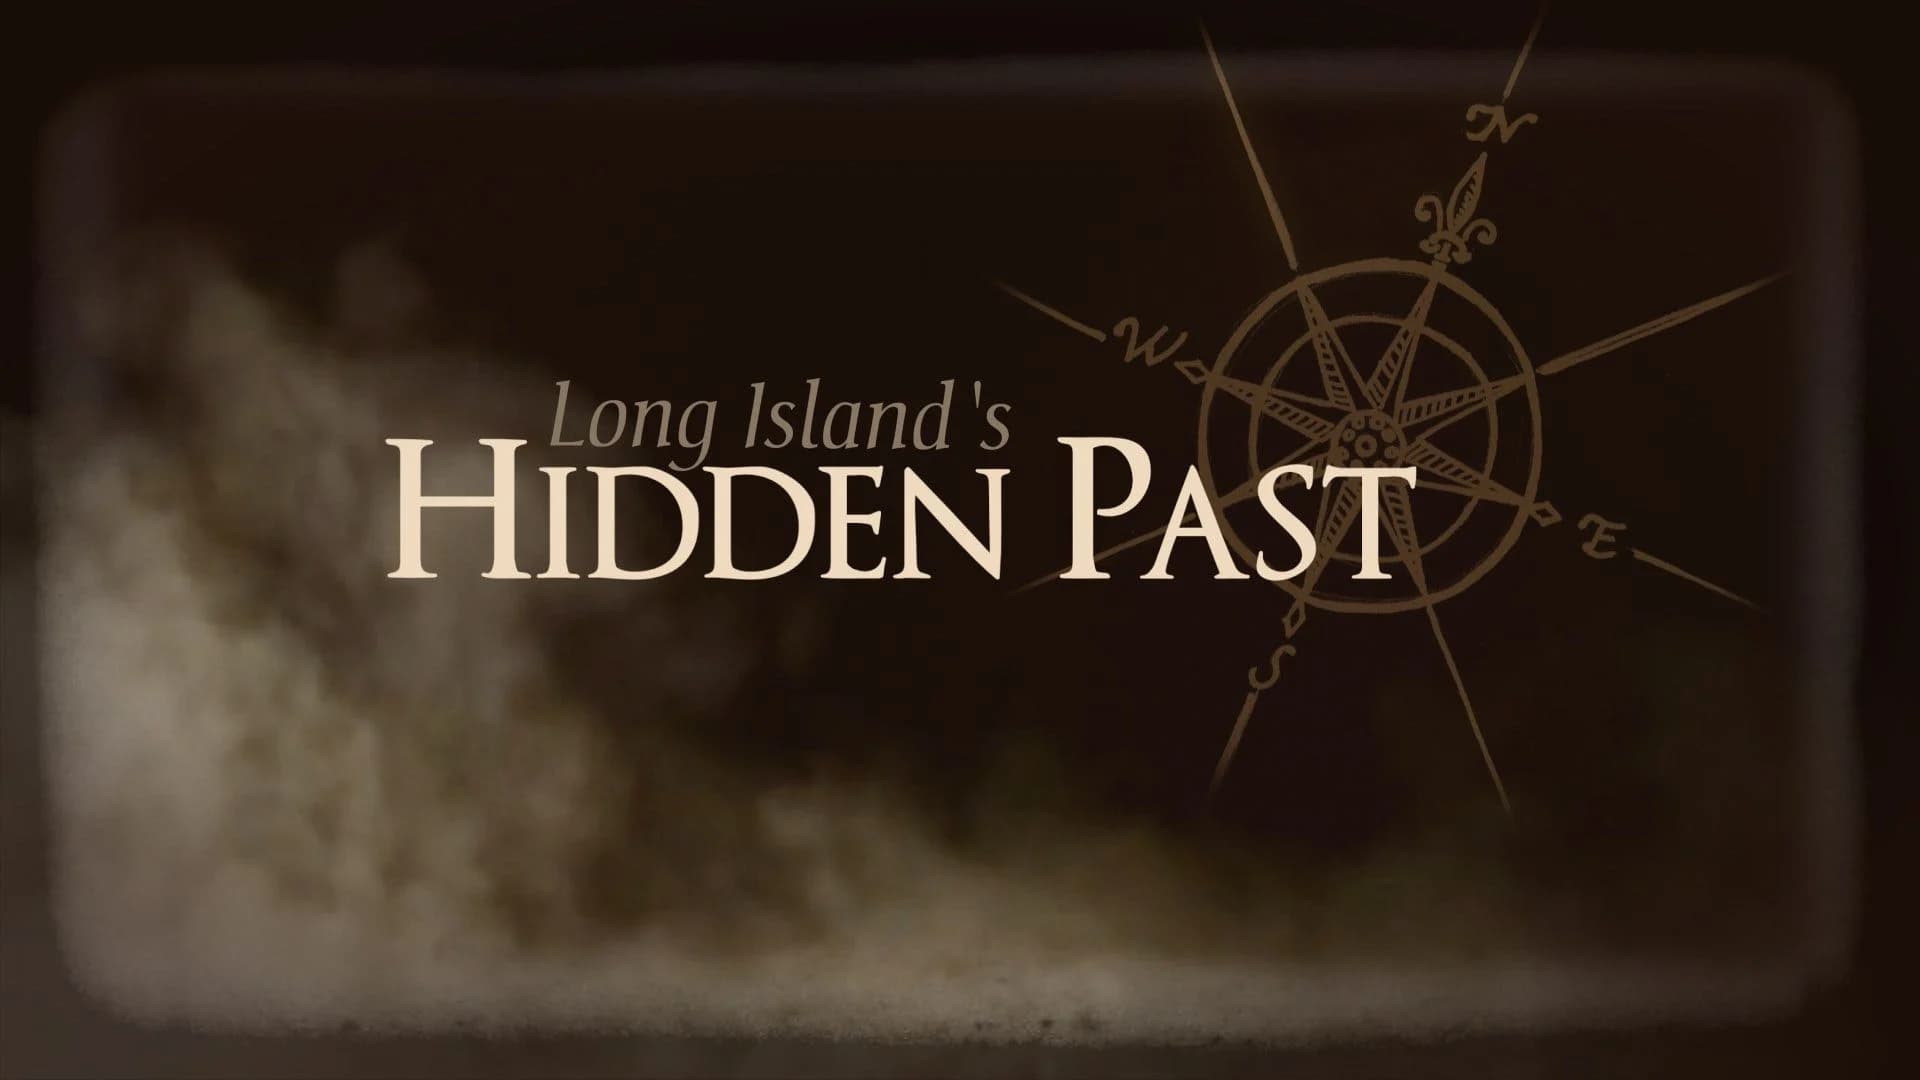 Long Island's Hidden Past: More Information